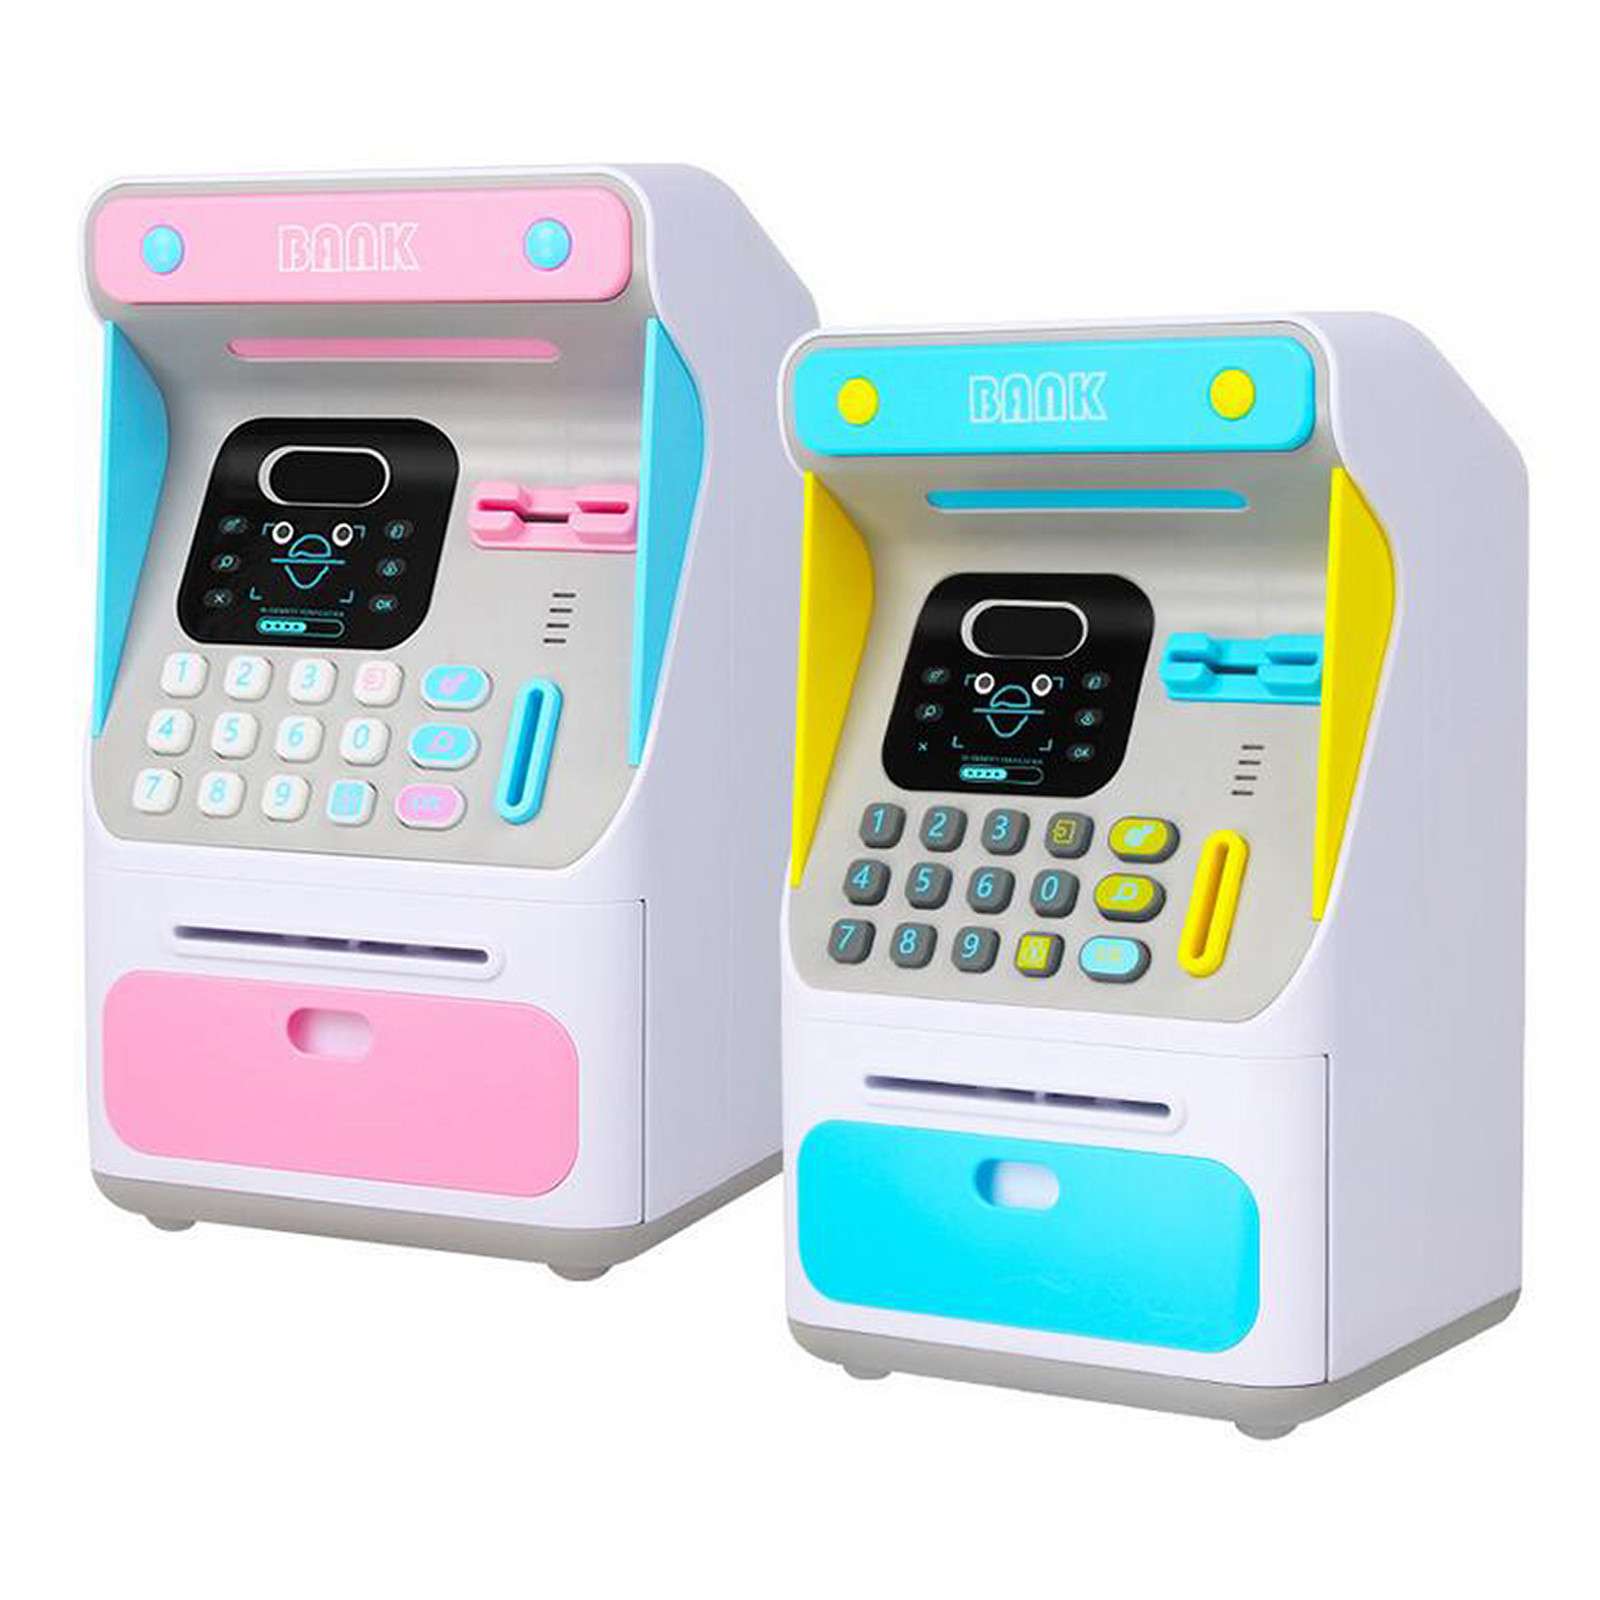 ATM piggy bank Savings Bank money box Toys ATM Cash Coin Money Savings Bank Pink Machine Perfect for Kids